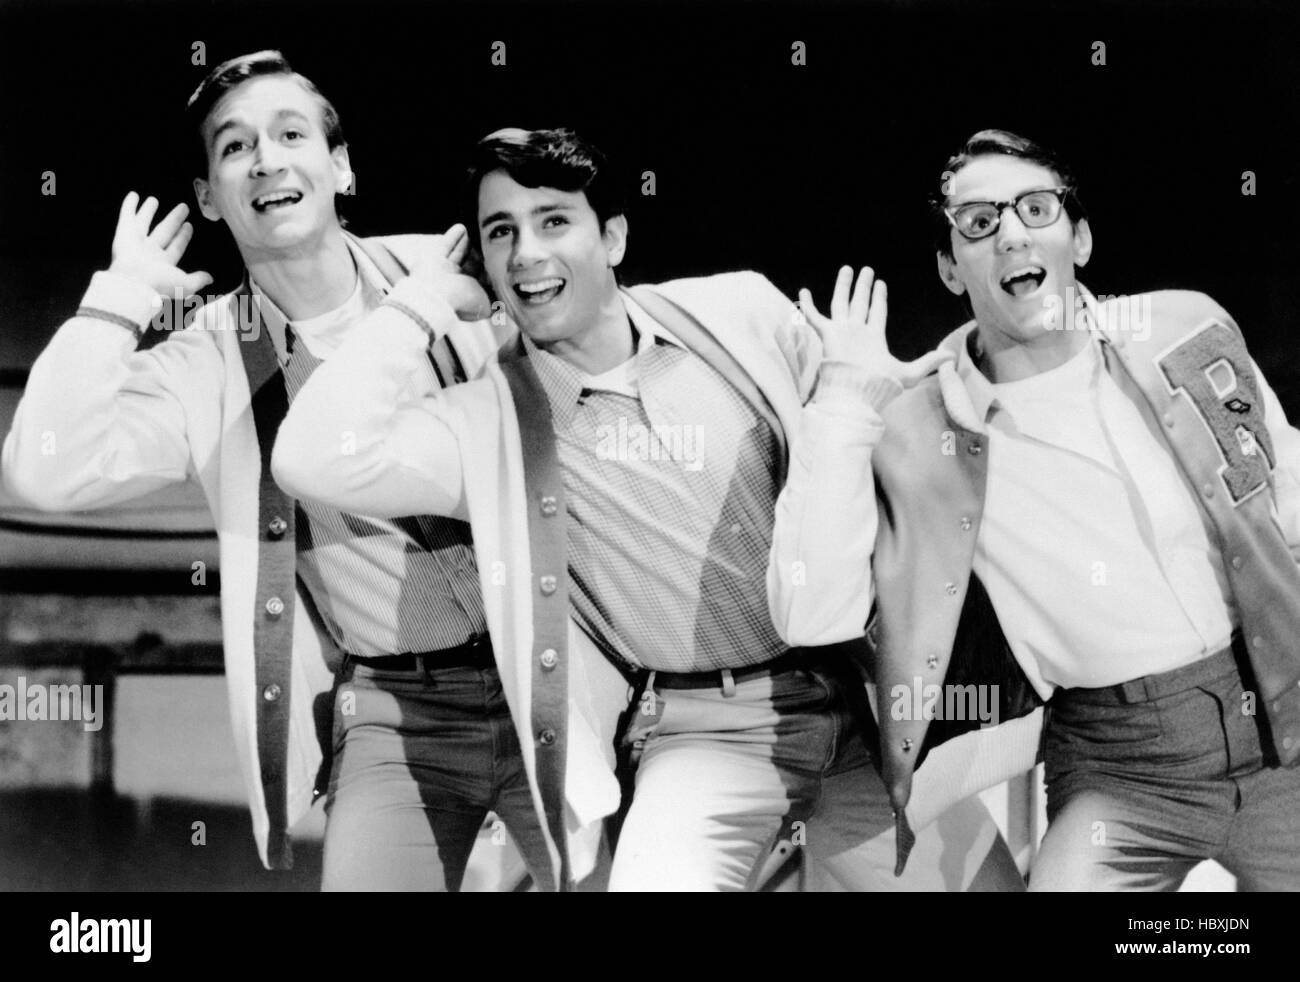 GREASE 2, from left, Charles McGowan, Matt Lattanzi, John Robert Garrett,  1982, ©Paramount/courtesy Everett Collection Stock Photo - Alamy